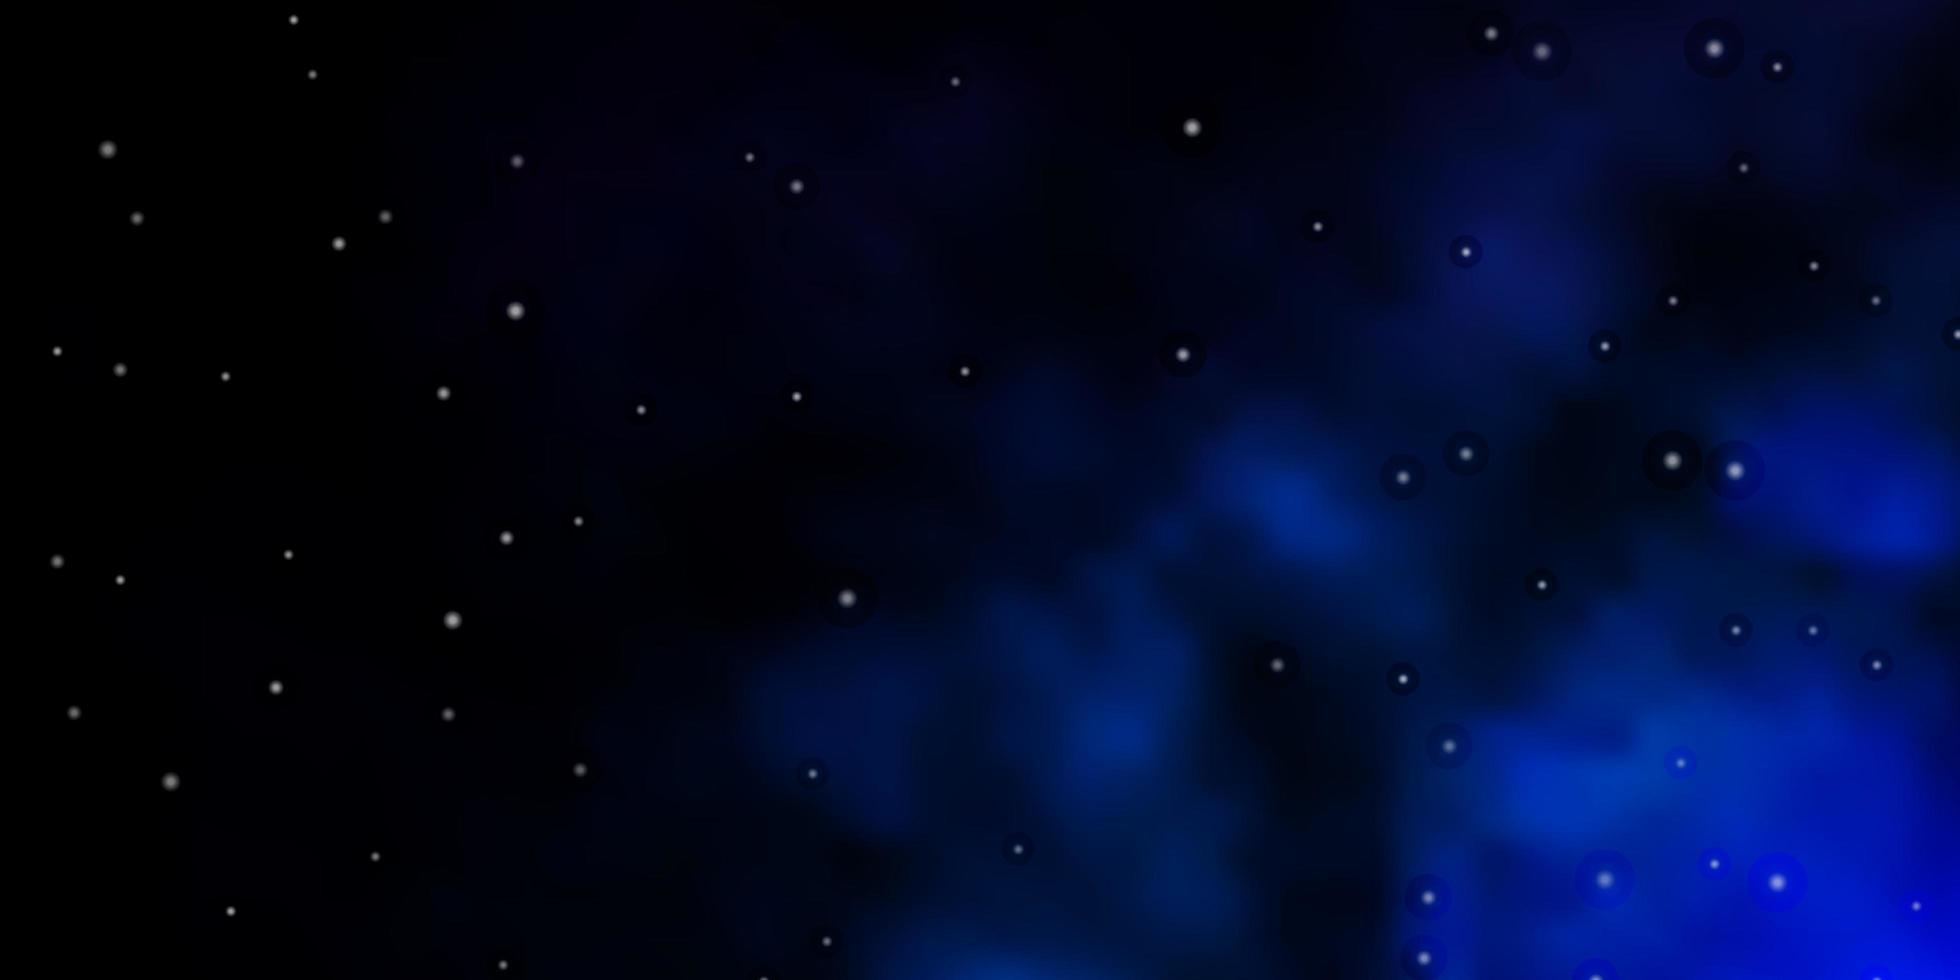 modelo de vetor azul escuro com estrelas de néon.